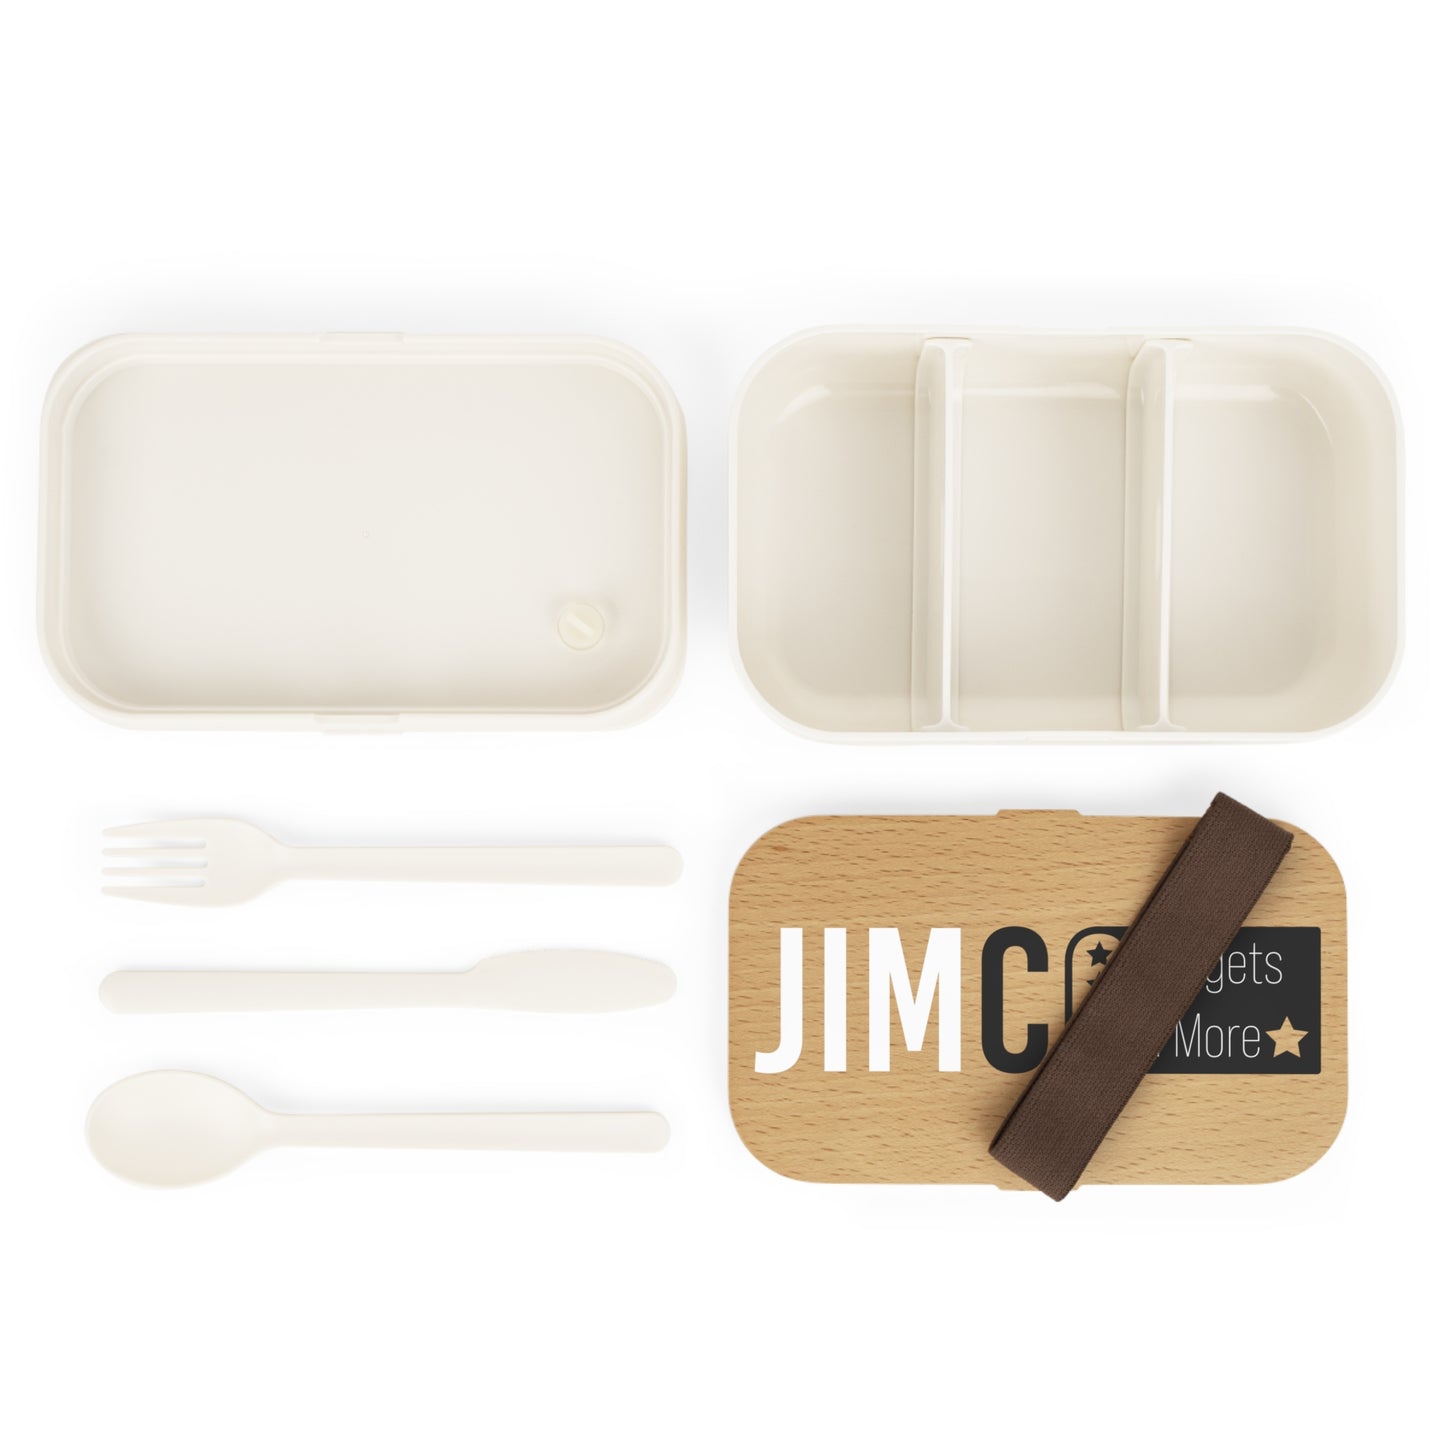 Jimco - Bento Lunch Box